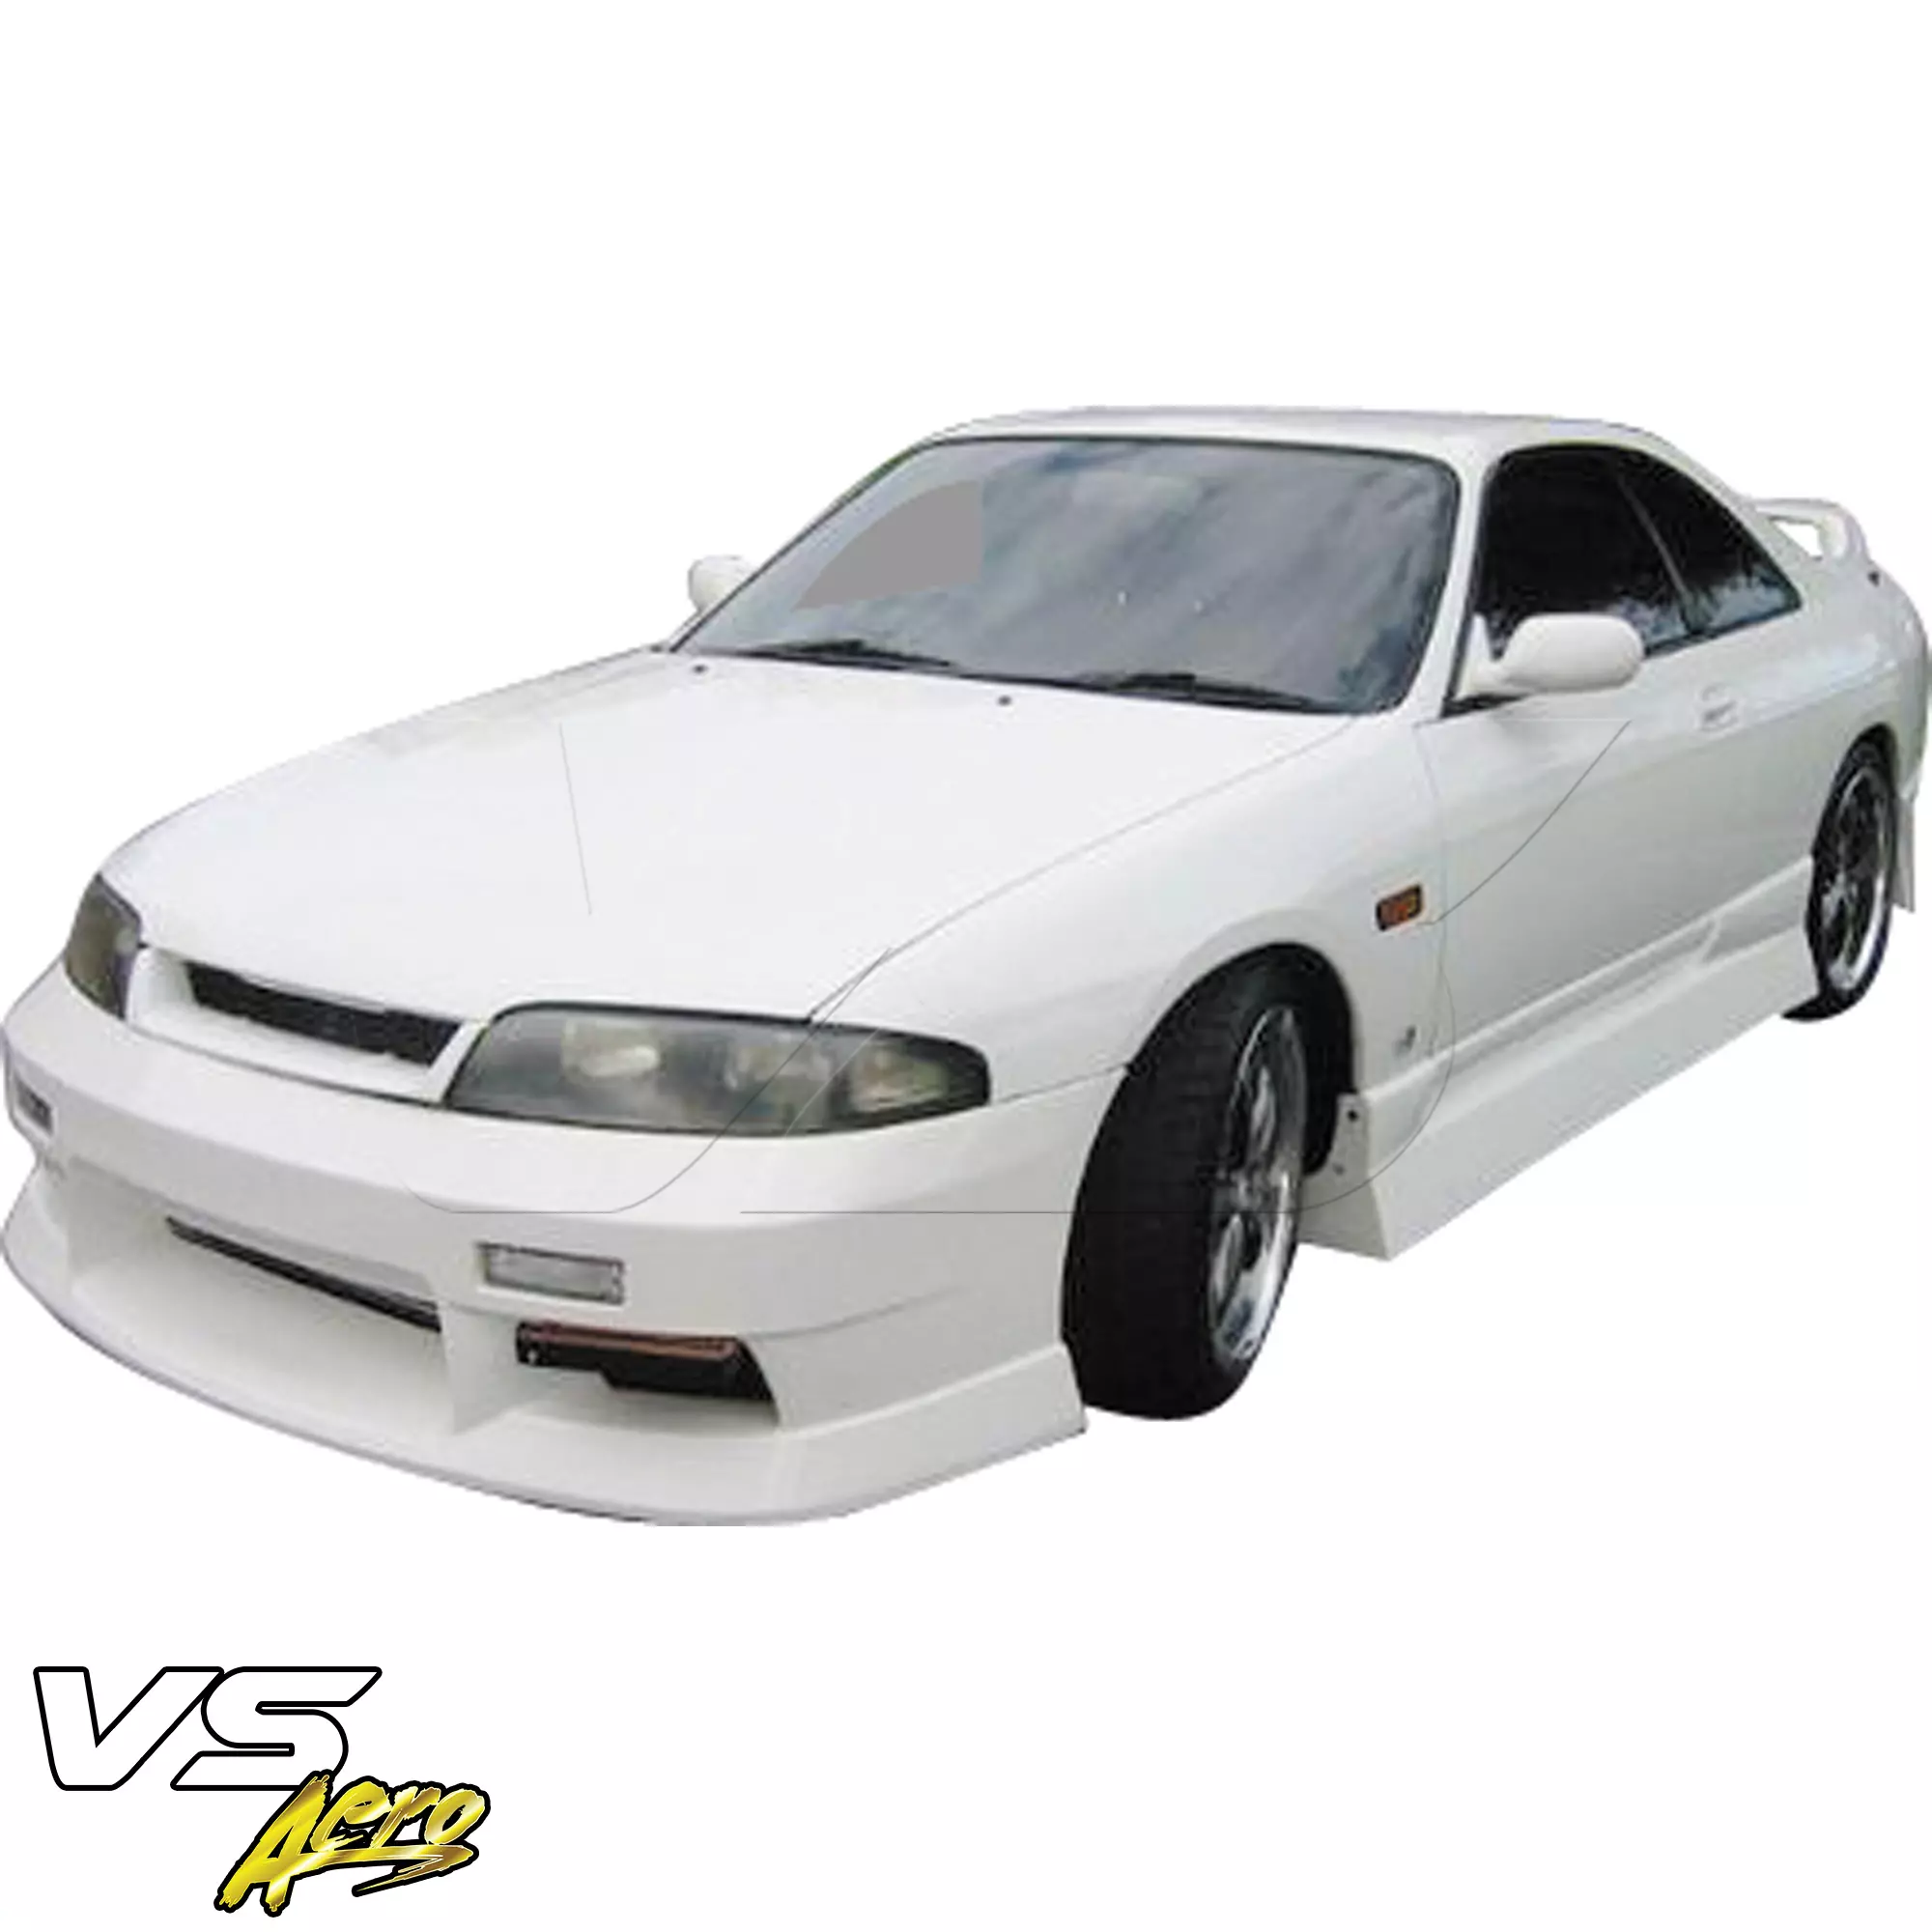 VSaero FRP MSPO Body Kit 4pc > Nissan Skyline R33 GTS 1995-1998 > 4dr Sedan - Image 5